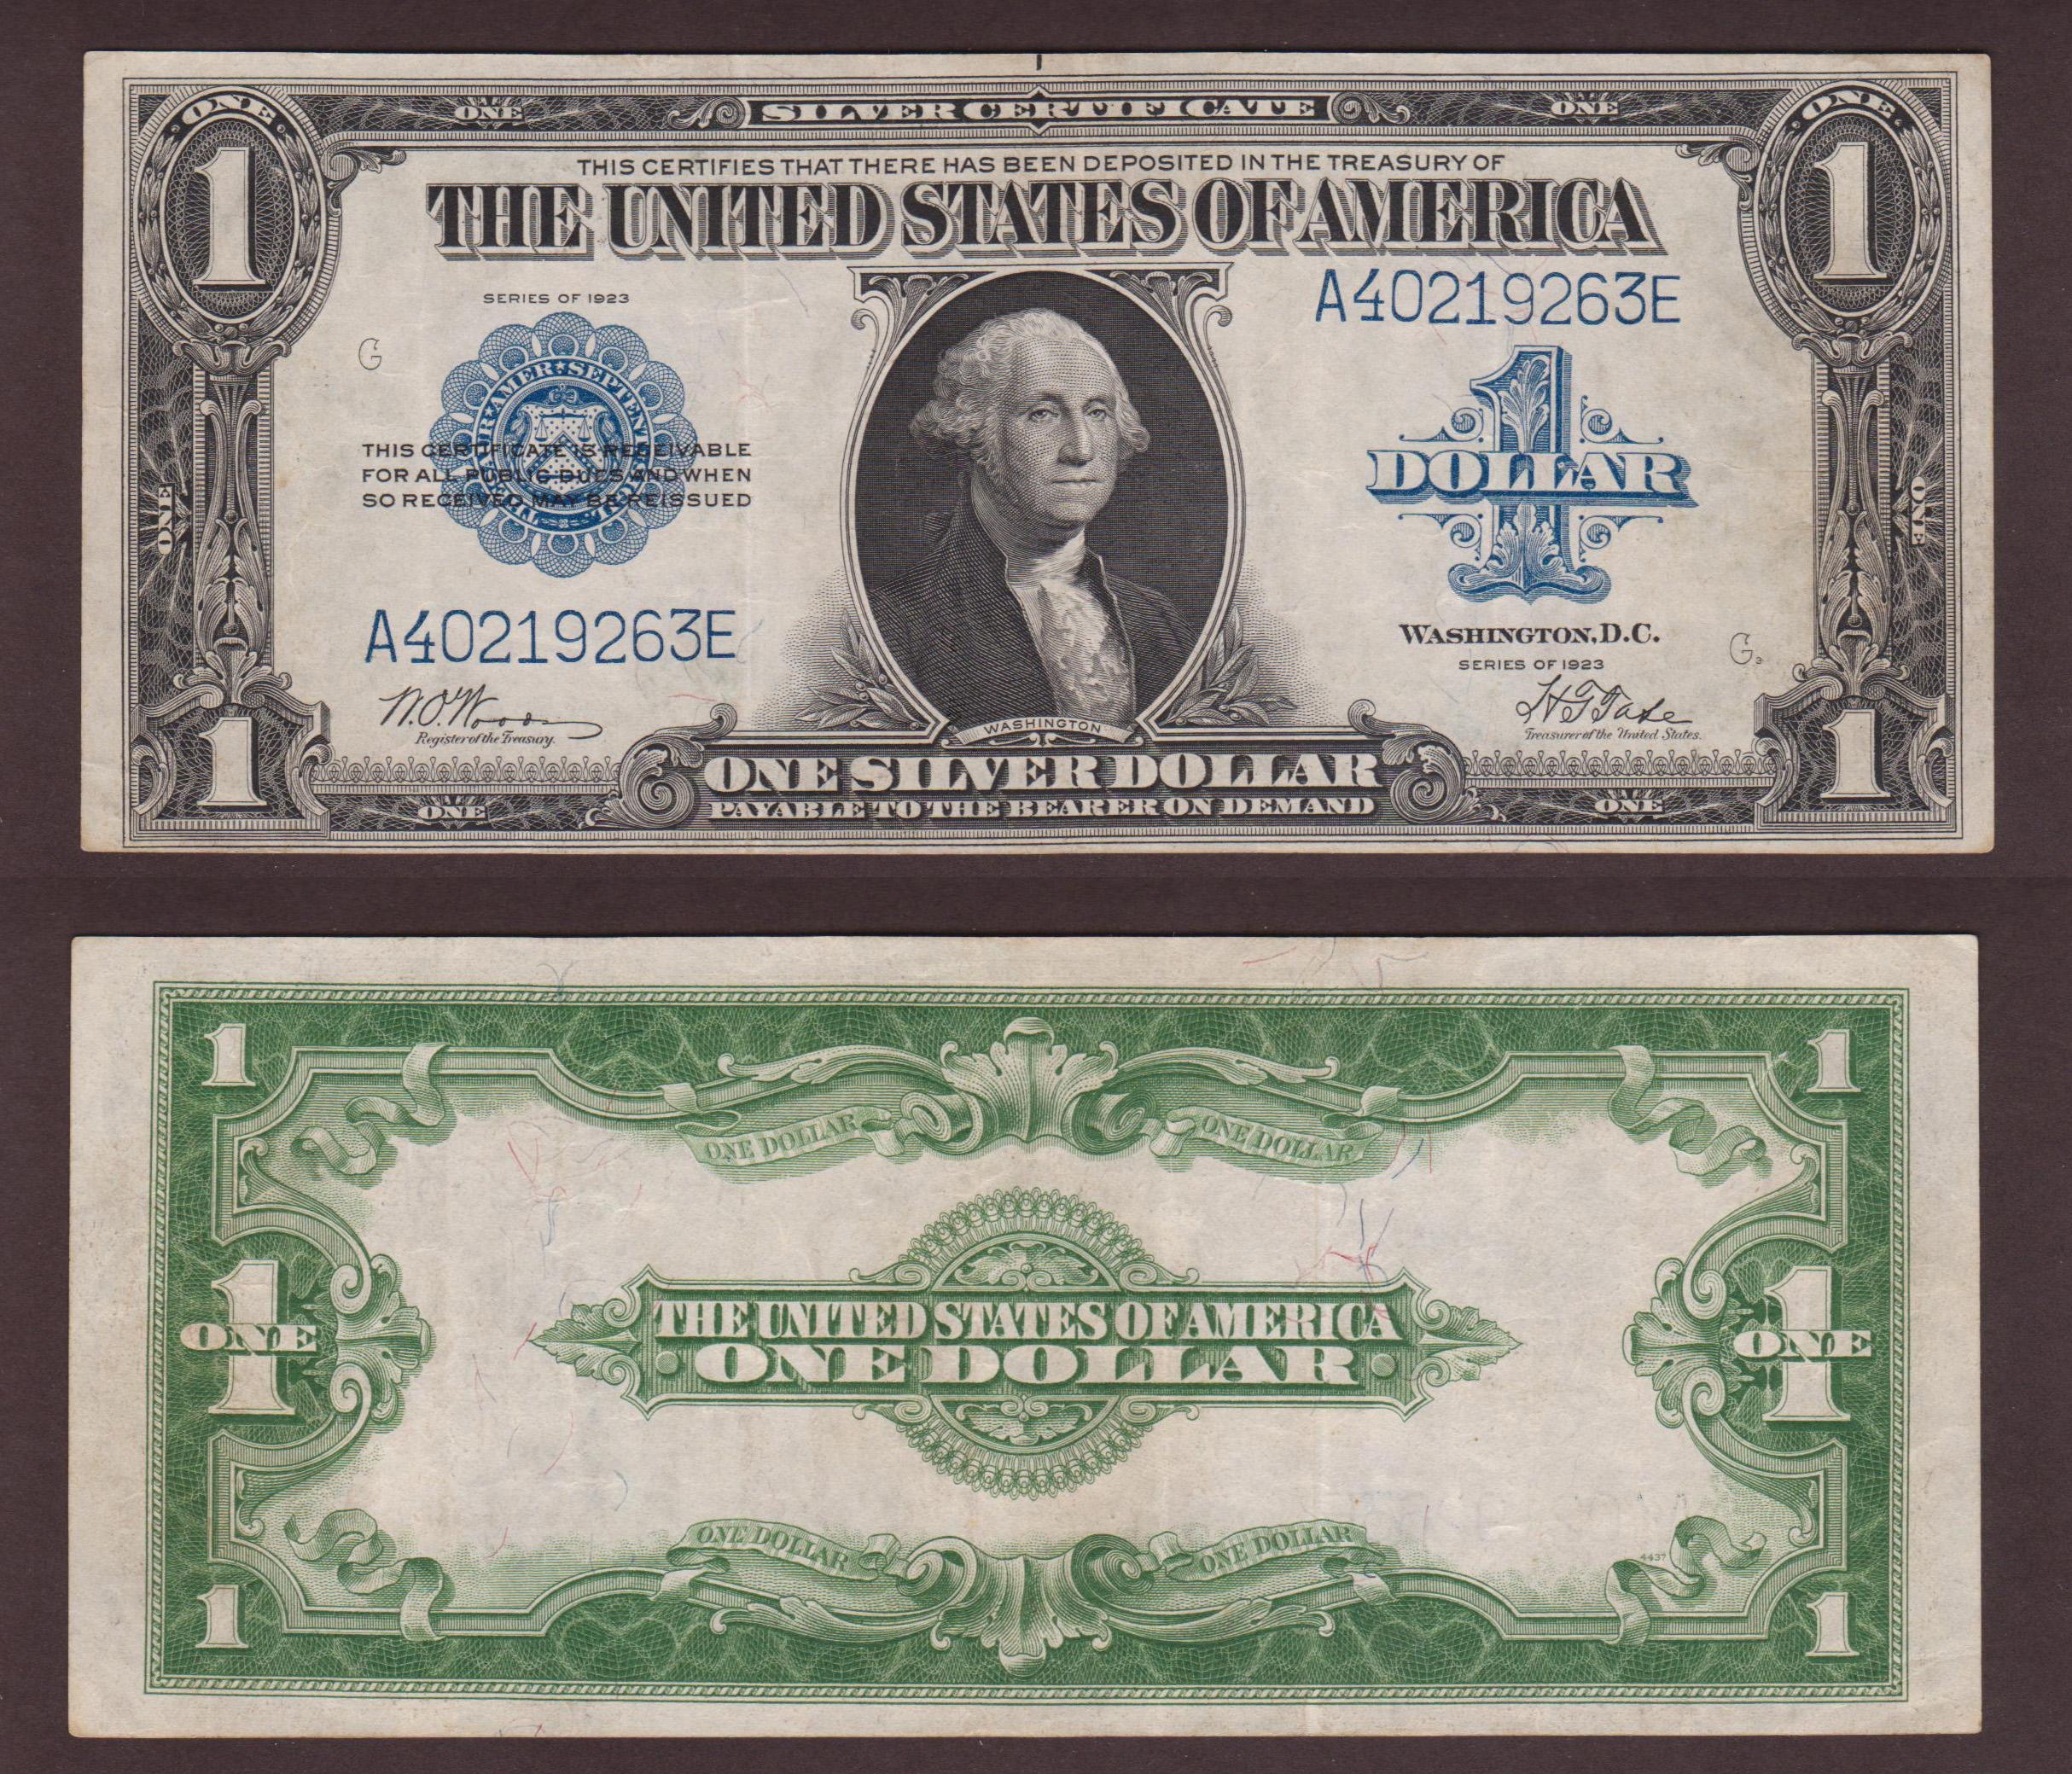 Банкнота номиналом в один доллар США